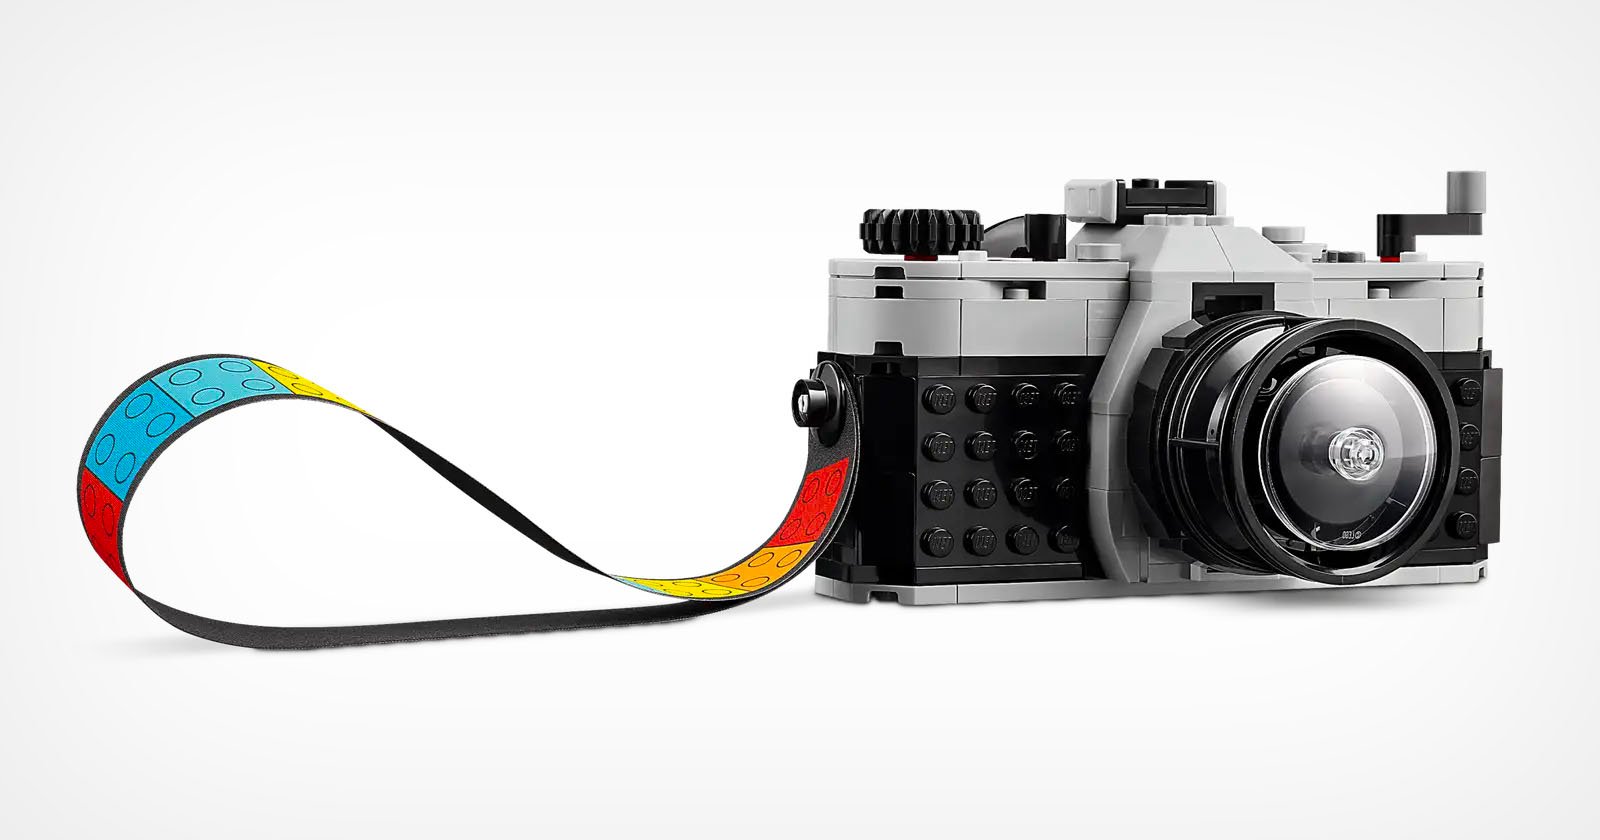 LEGO Ideas 2024 Polaroid Camera revealed!